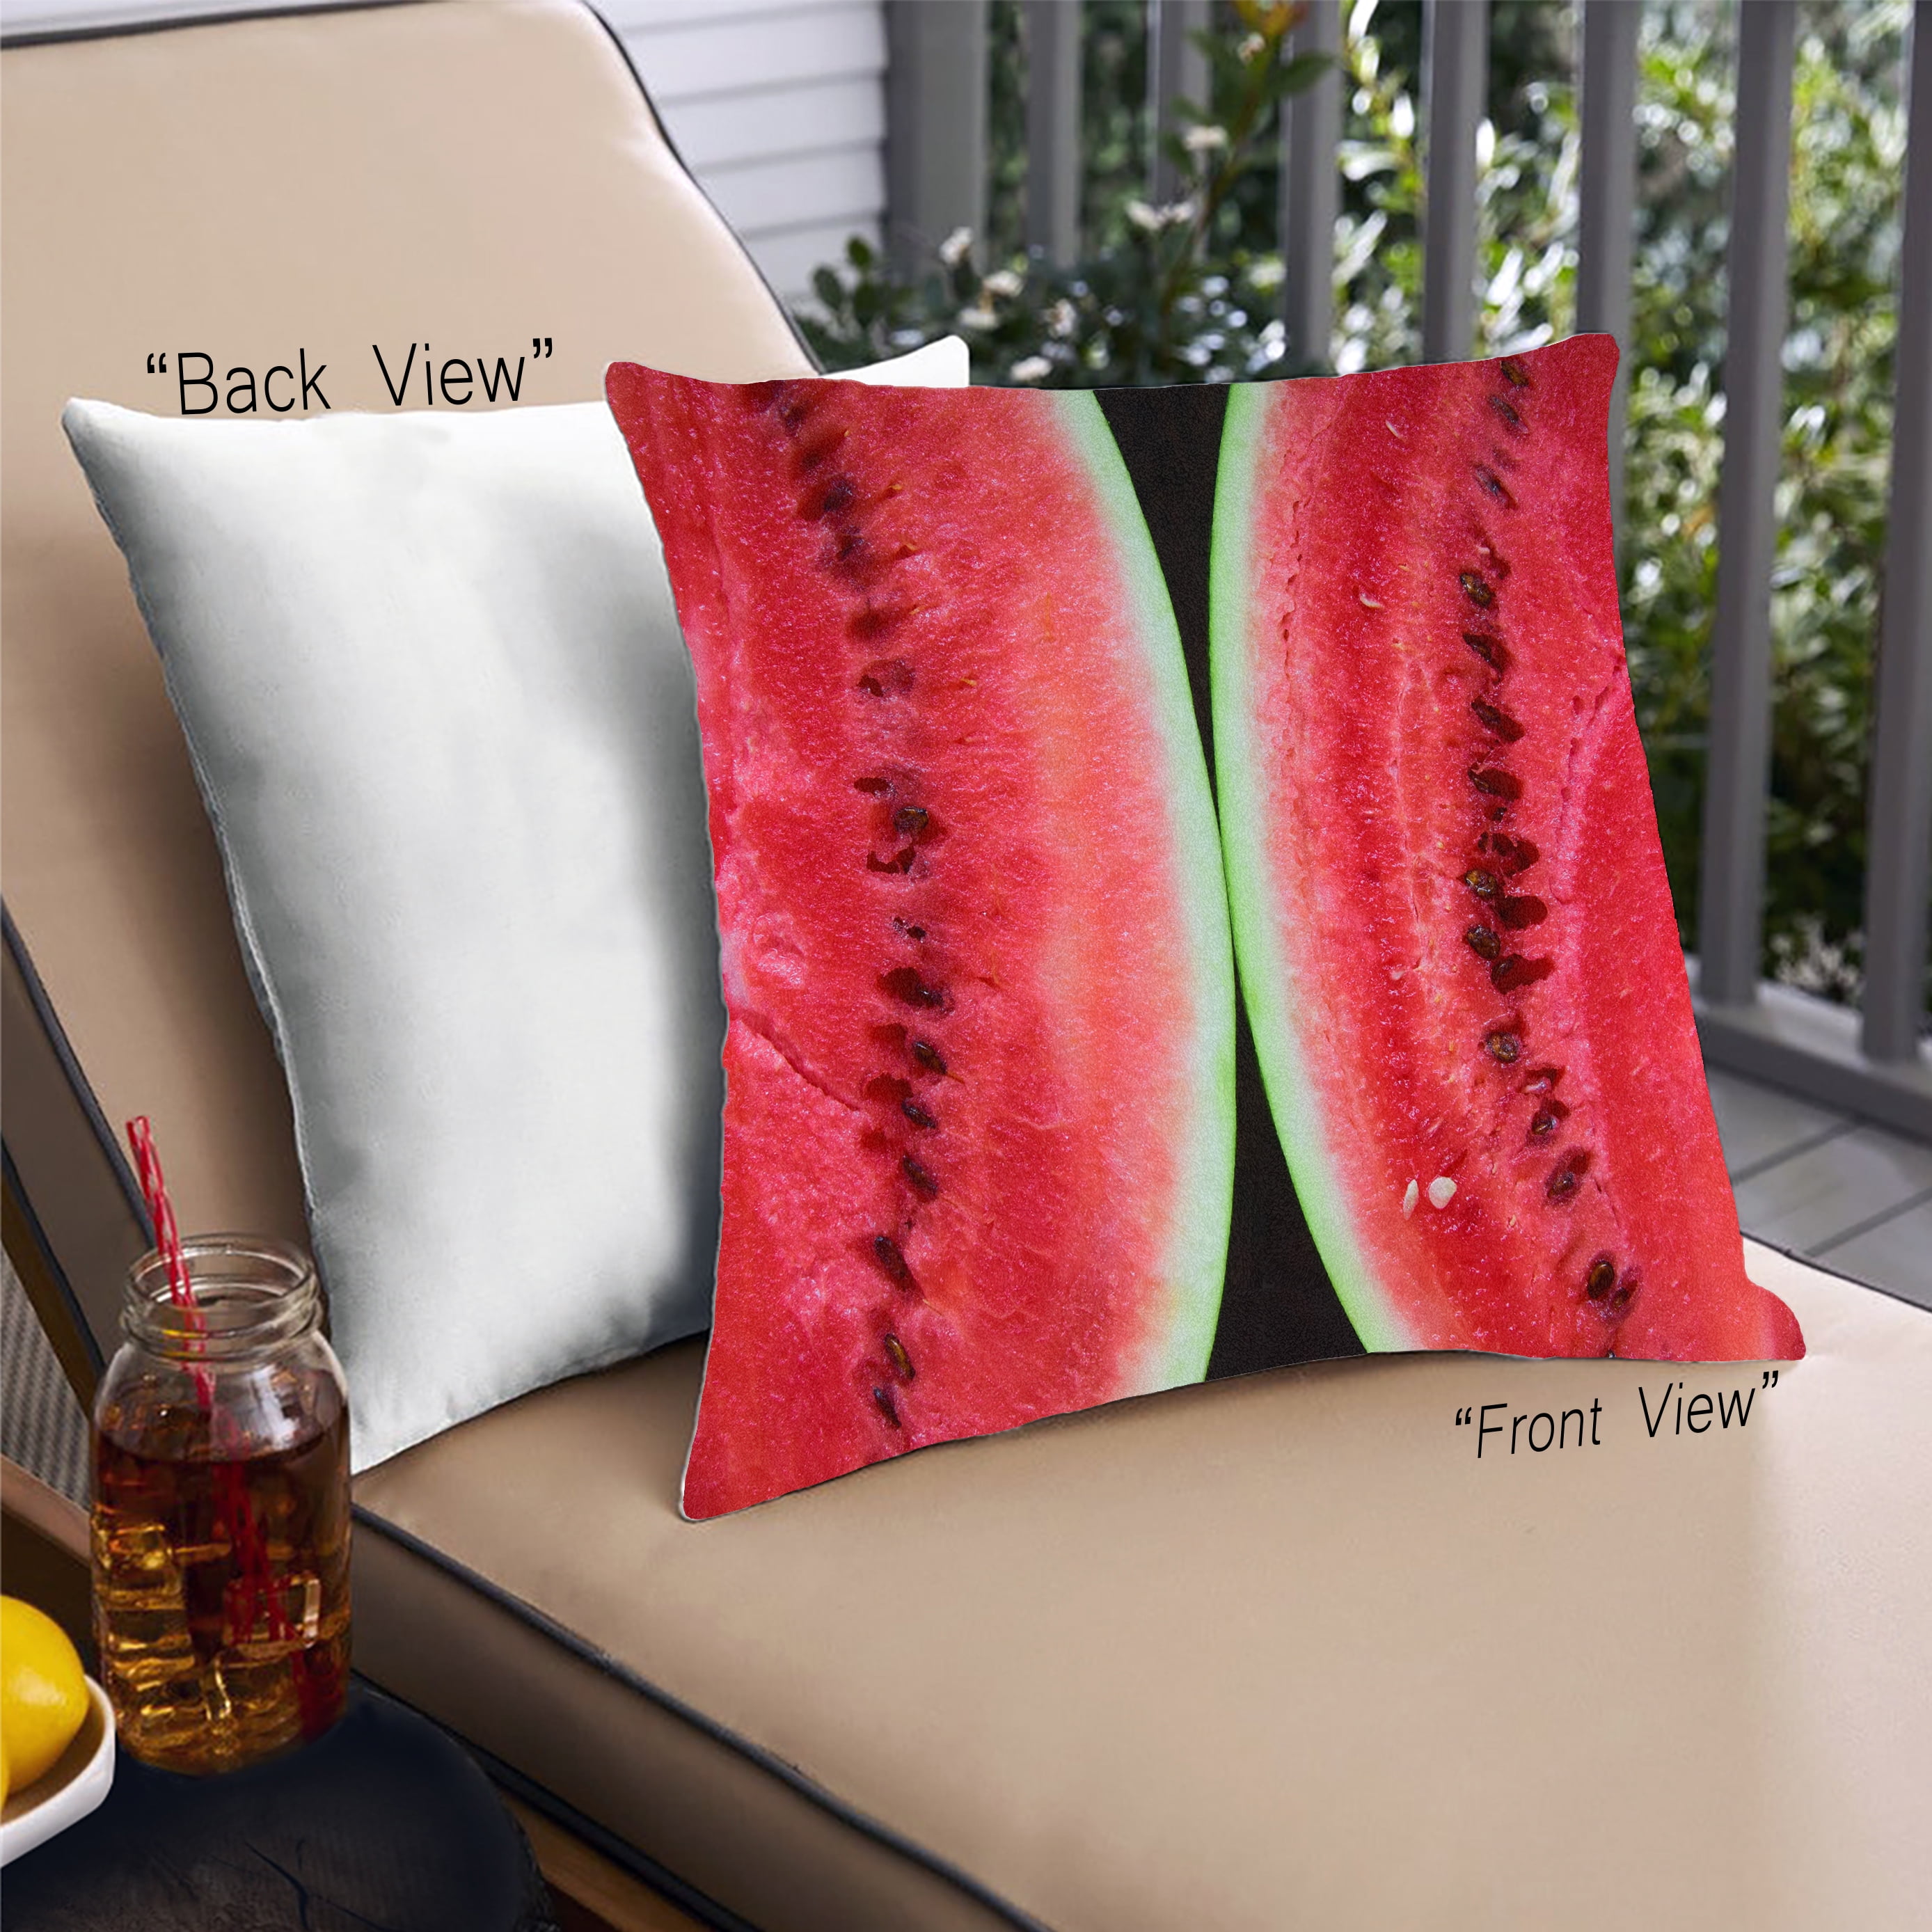 PAIR of 22 Pink and Cream Leopard Cut Velvet Pillow Covers  Backed in Watermelon Velvet